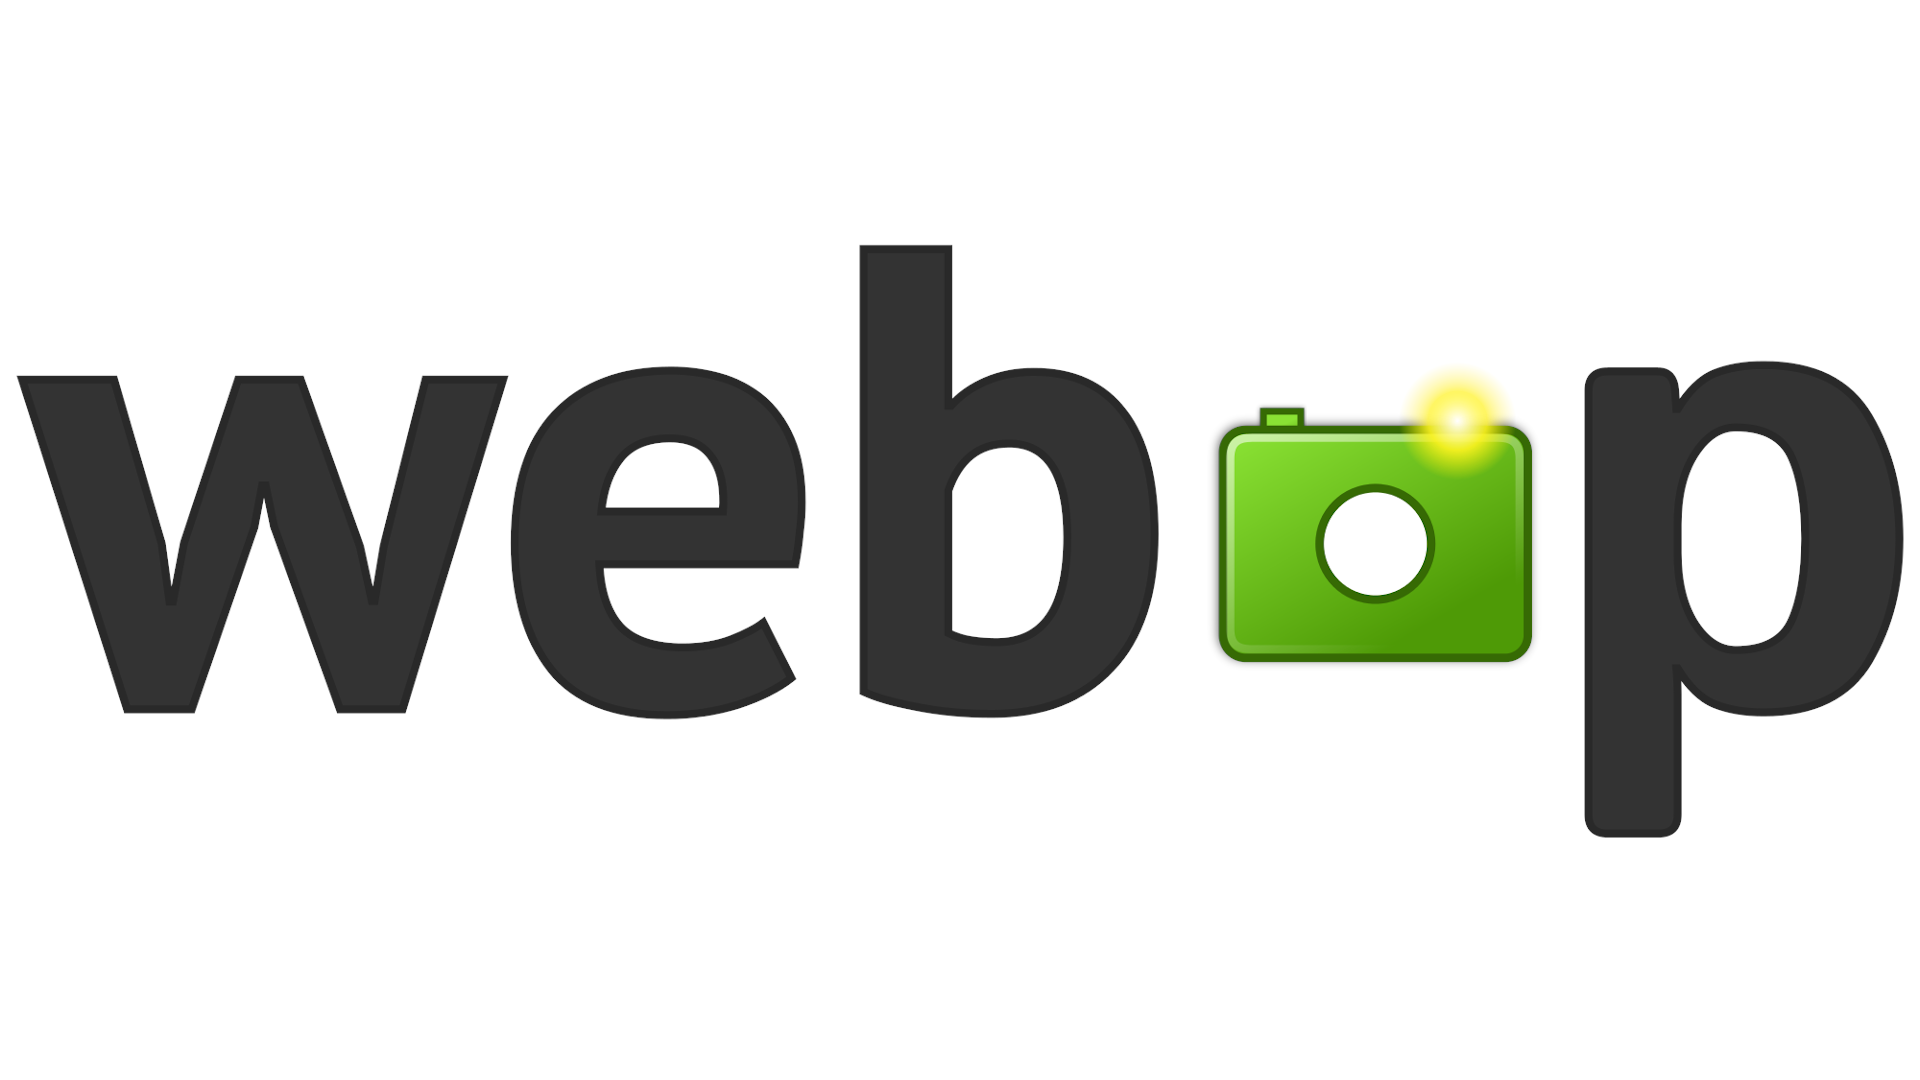 The webp logo